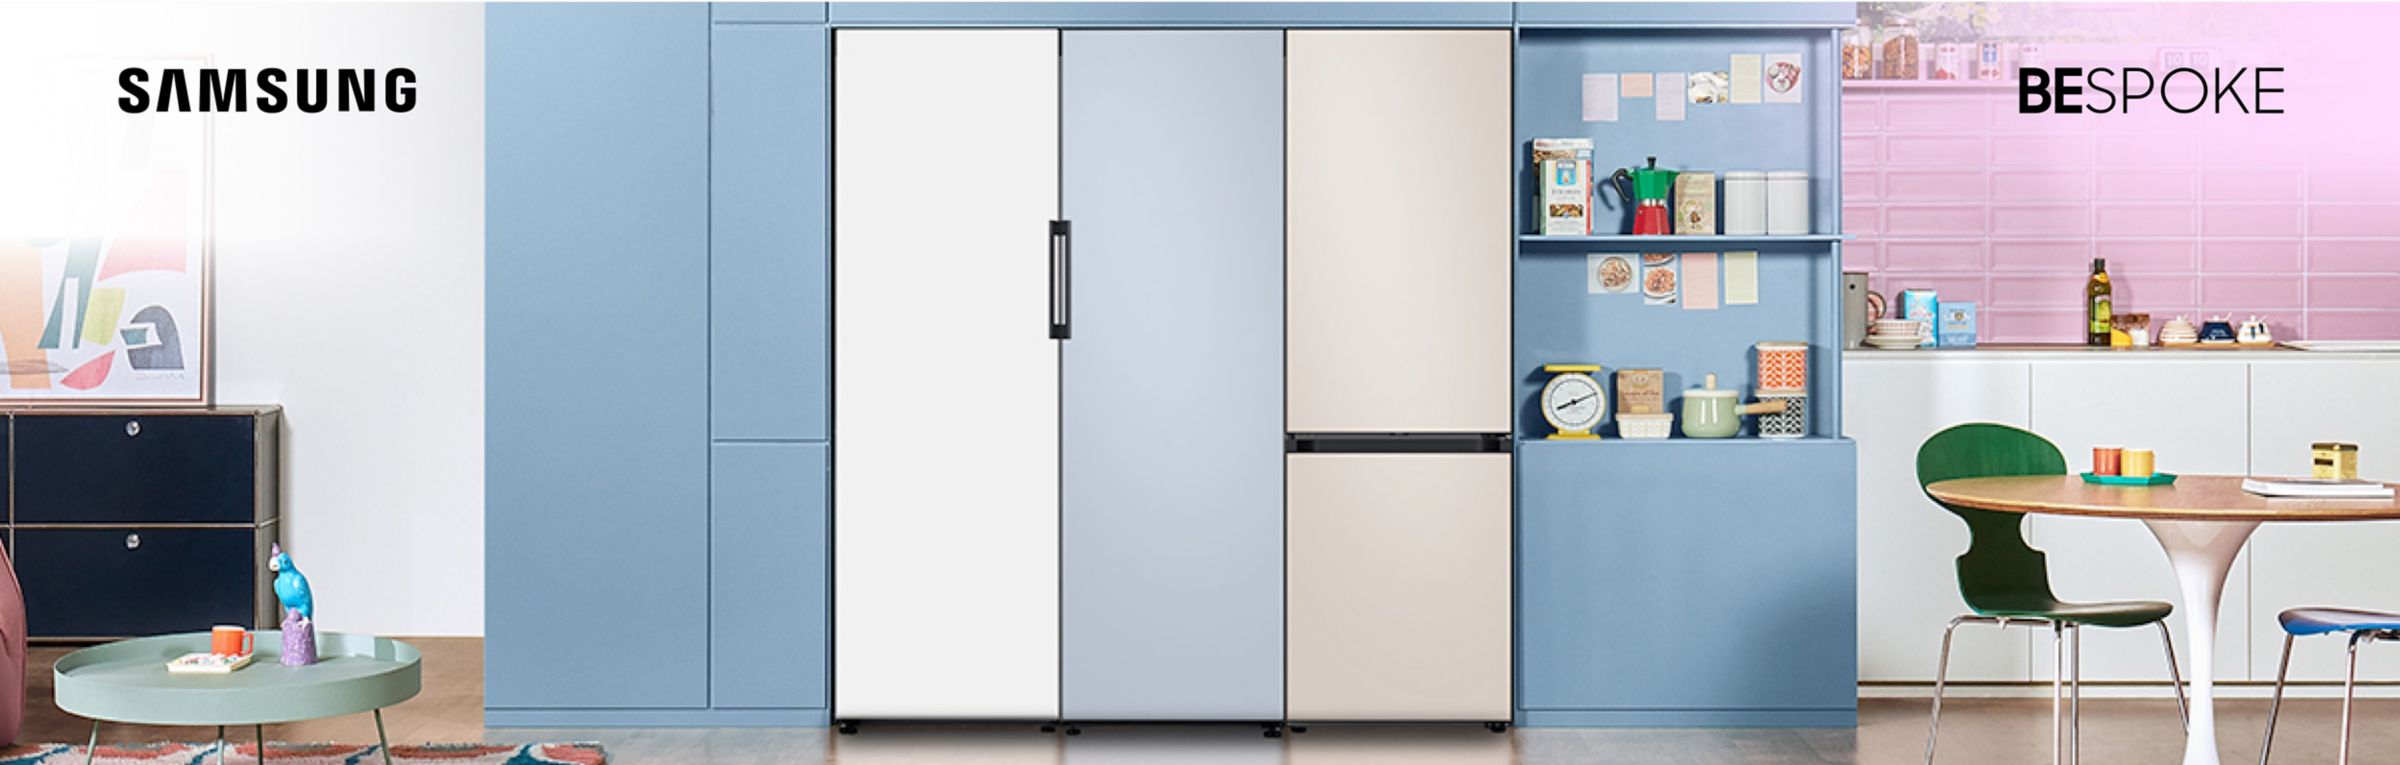 Samsung Bespoke Fridge Freezers Image